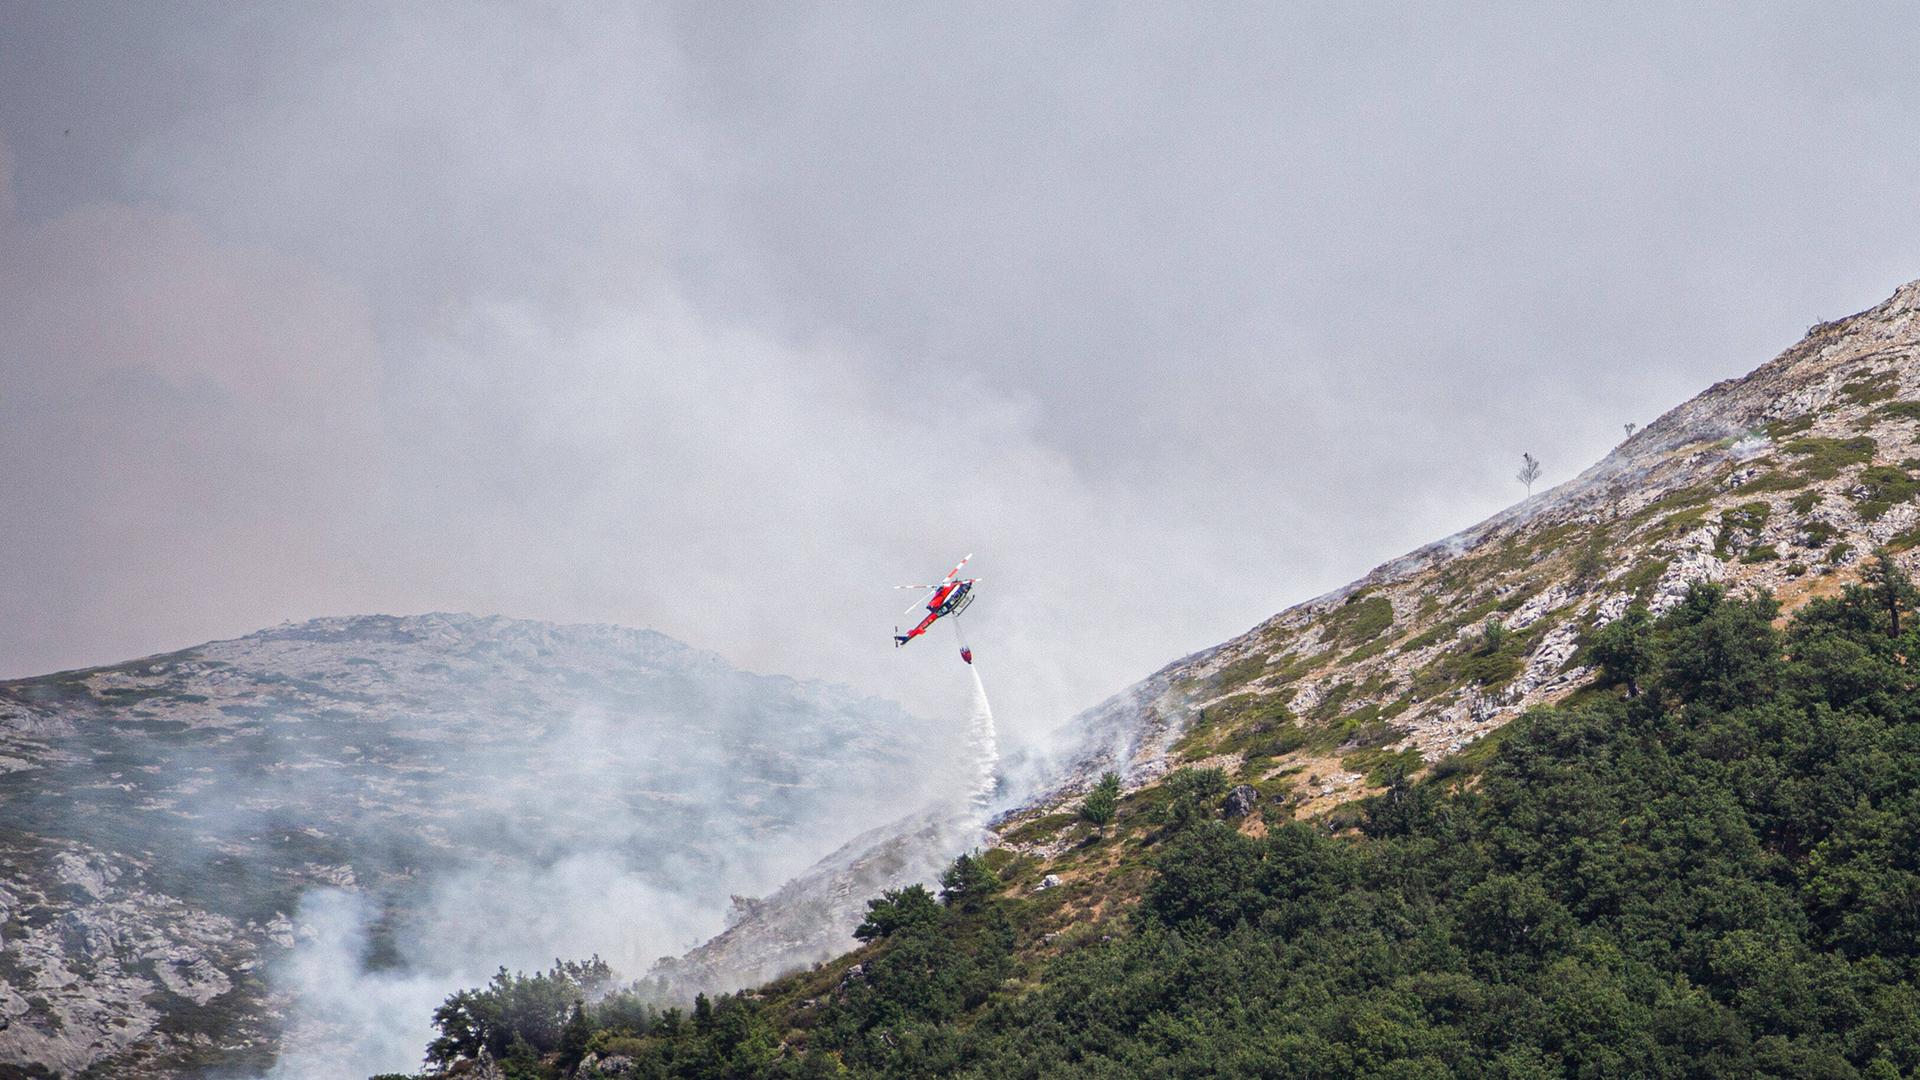 August 10, 2022, Boca de HuÃÆrgano, Leon, Spain: A firefighting helicopter drops water on a large wildfire in Boca de Hu